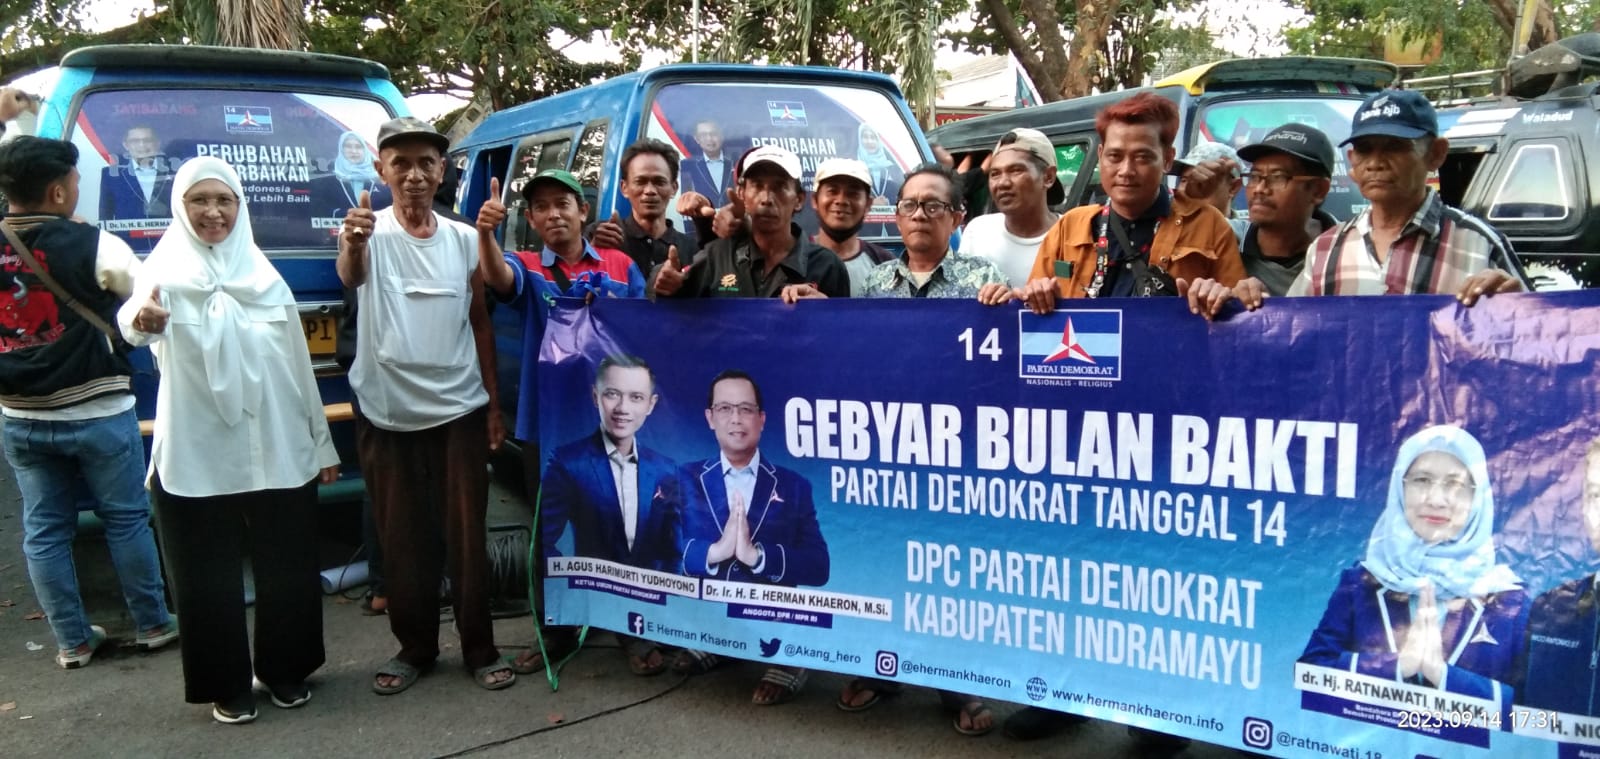 Bulan Bakti Partai Demokrat, Hj Ratnawati Bagikan Ratusan Paket Sembako